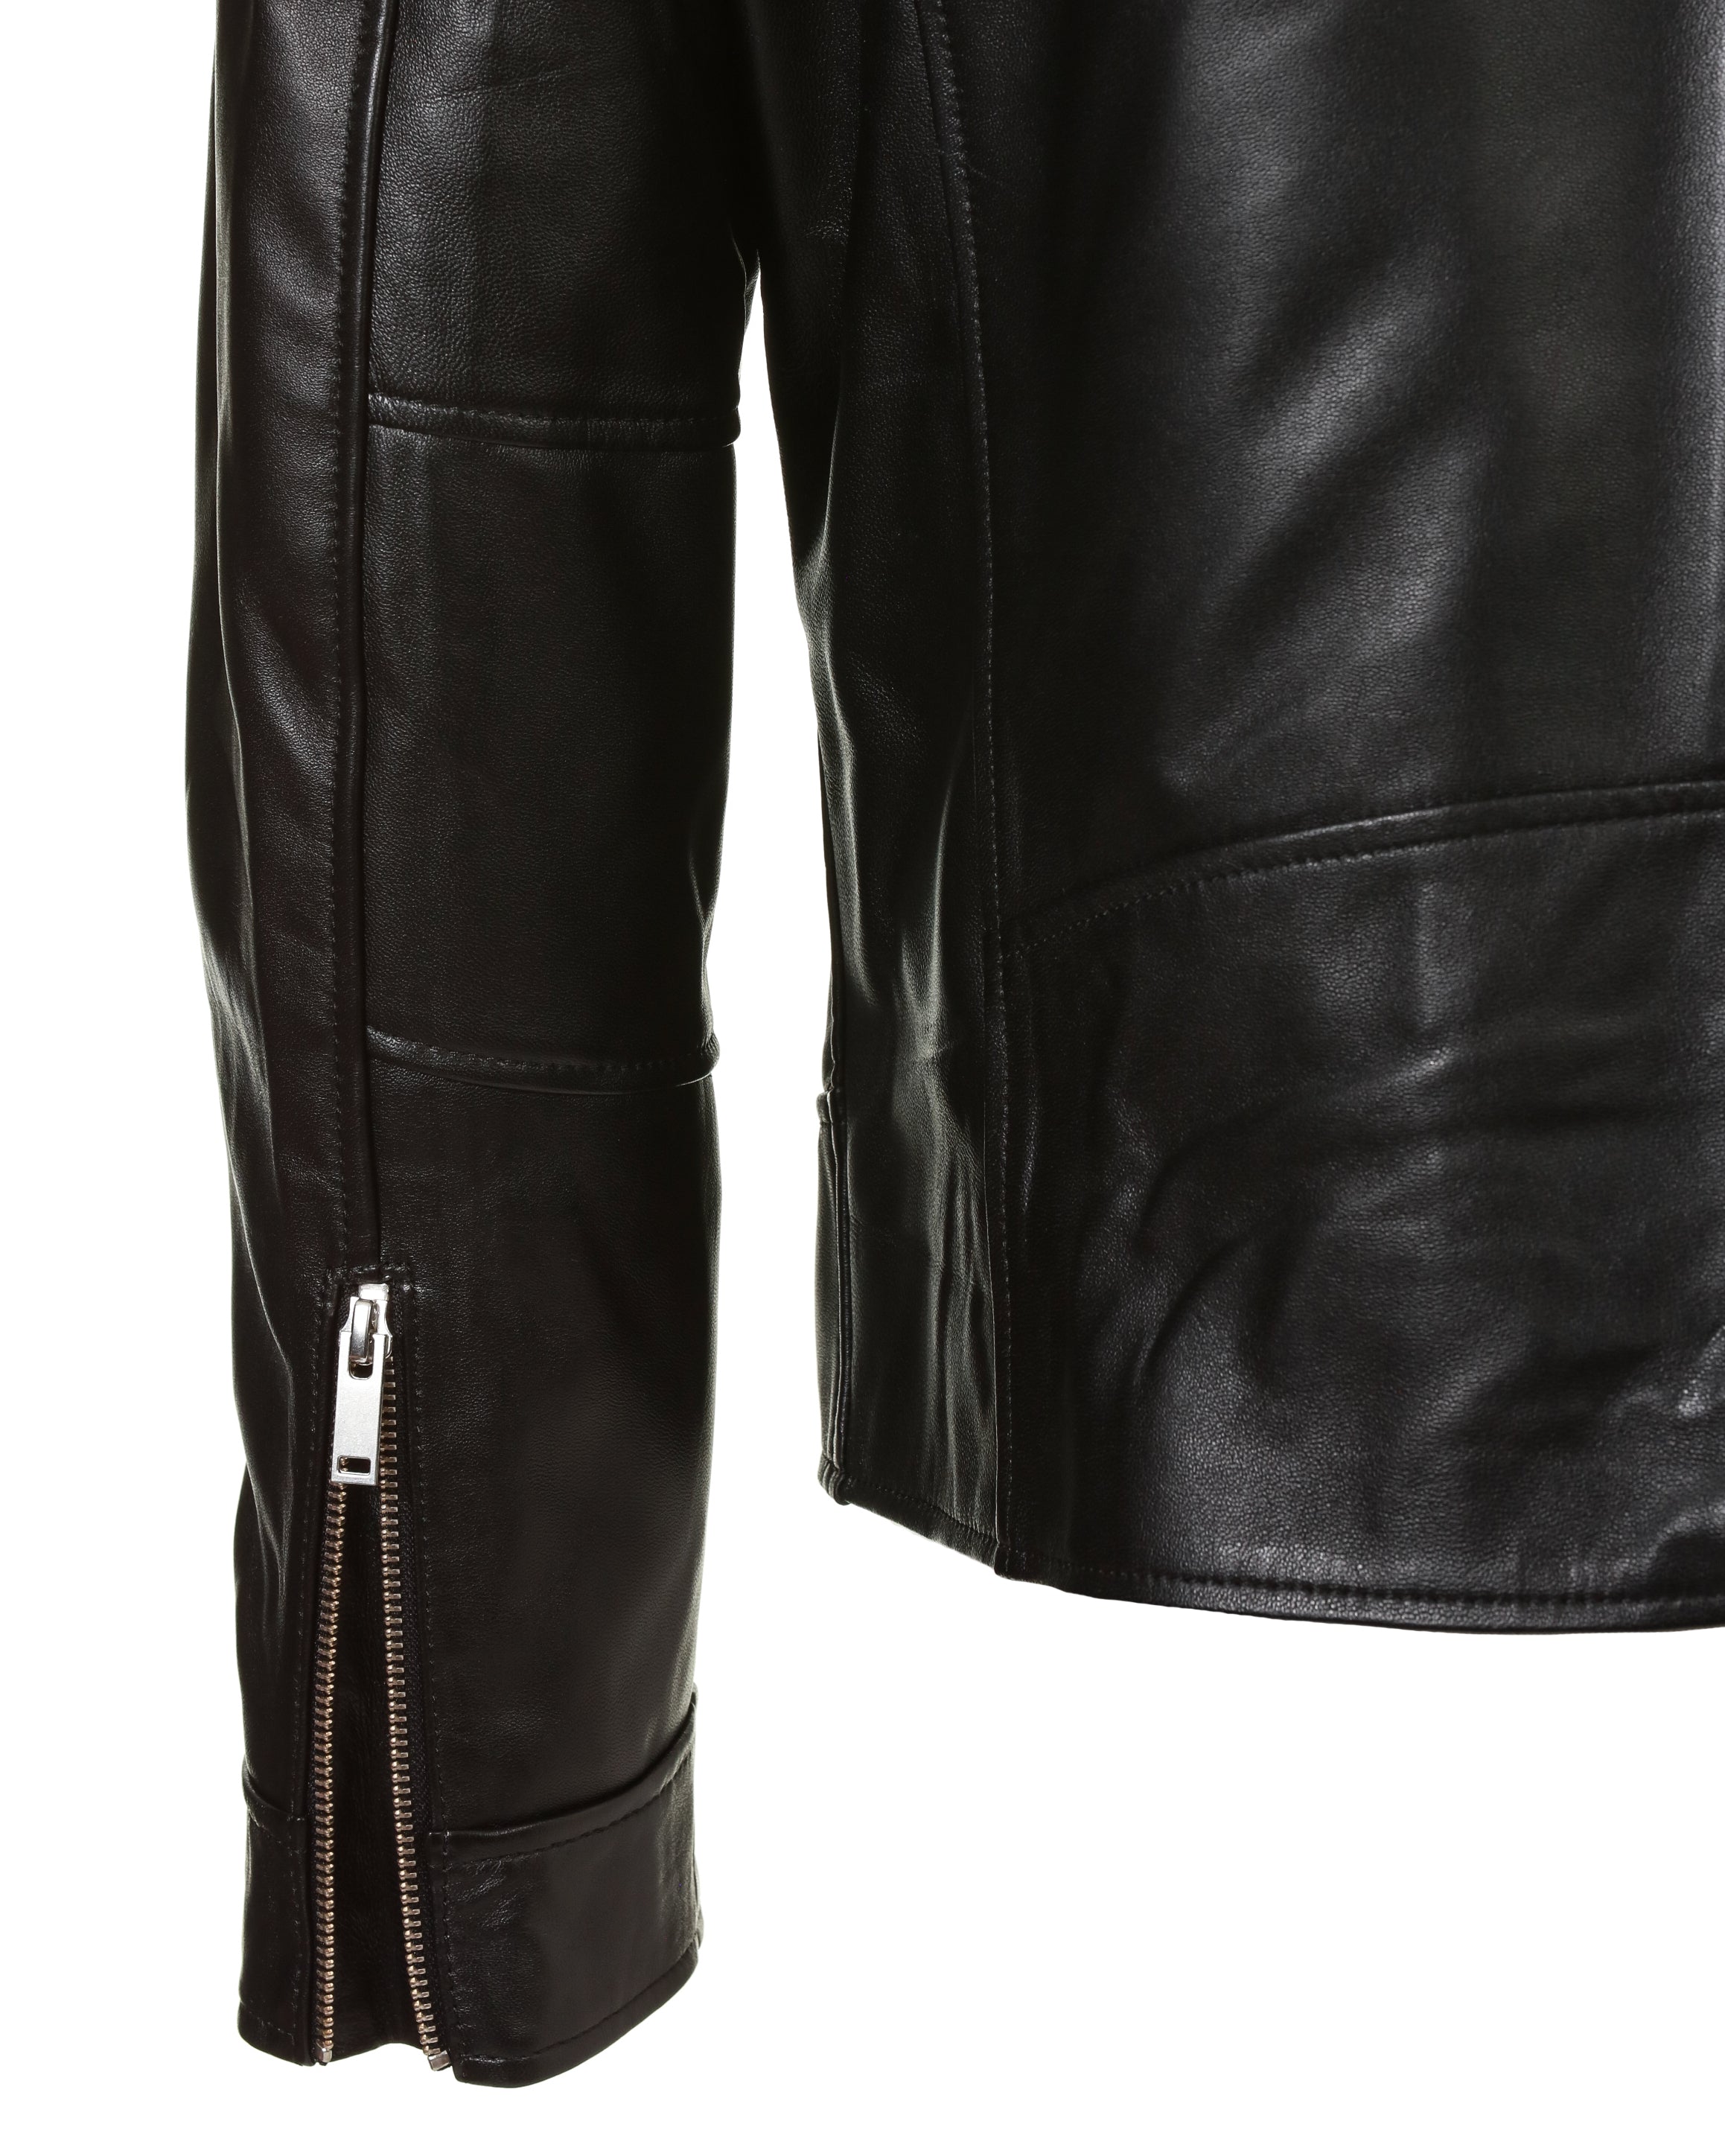 Lambskin Leather Jacket - Black Studs - Leather Jacket by Urbbana